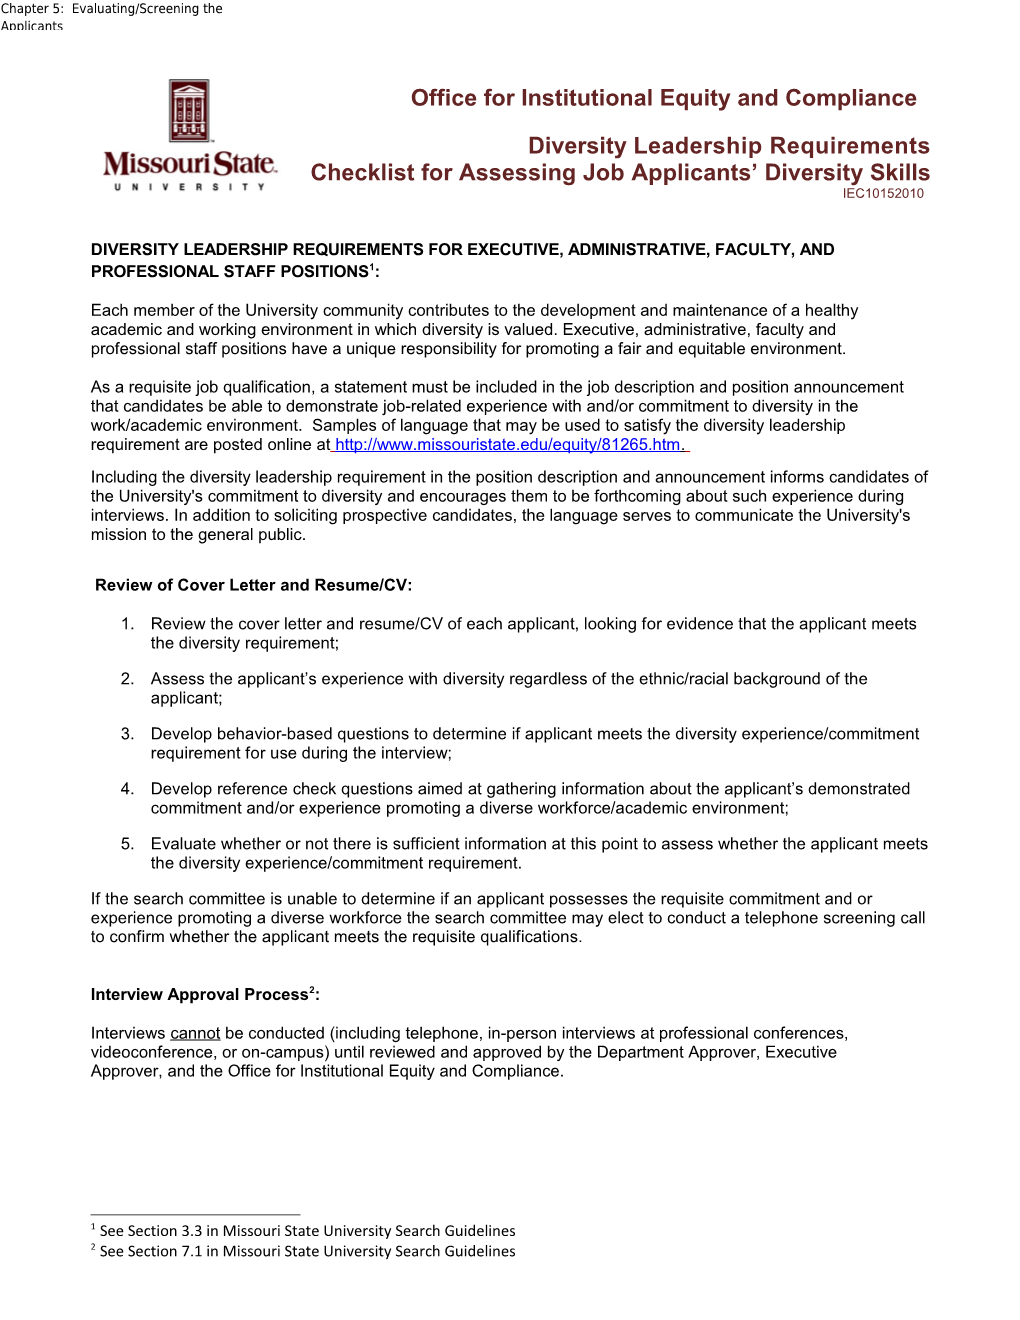 Checklist for Assessing Job Applicants Diversity Skills